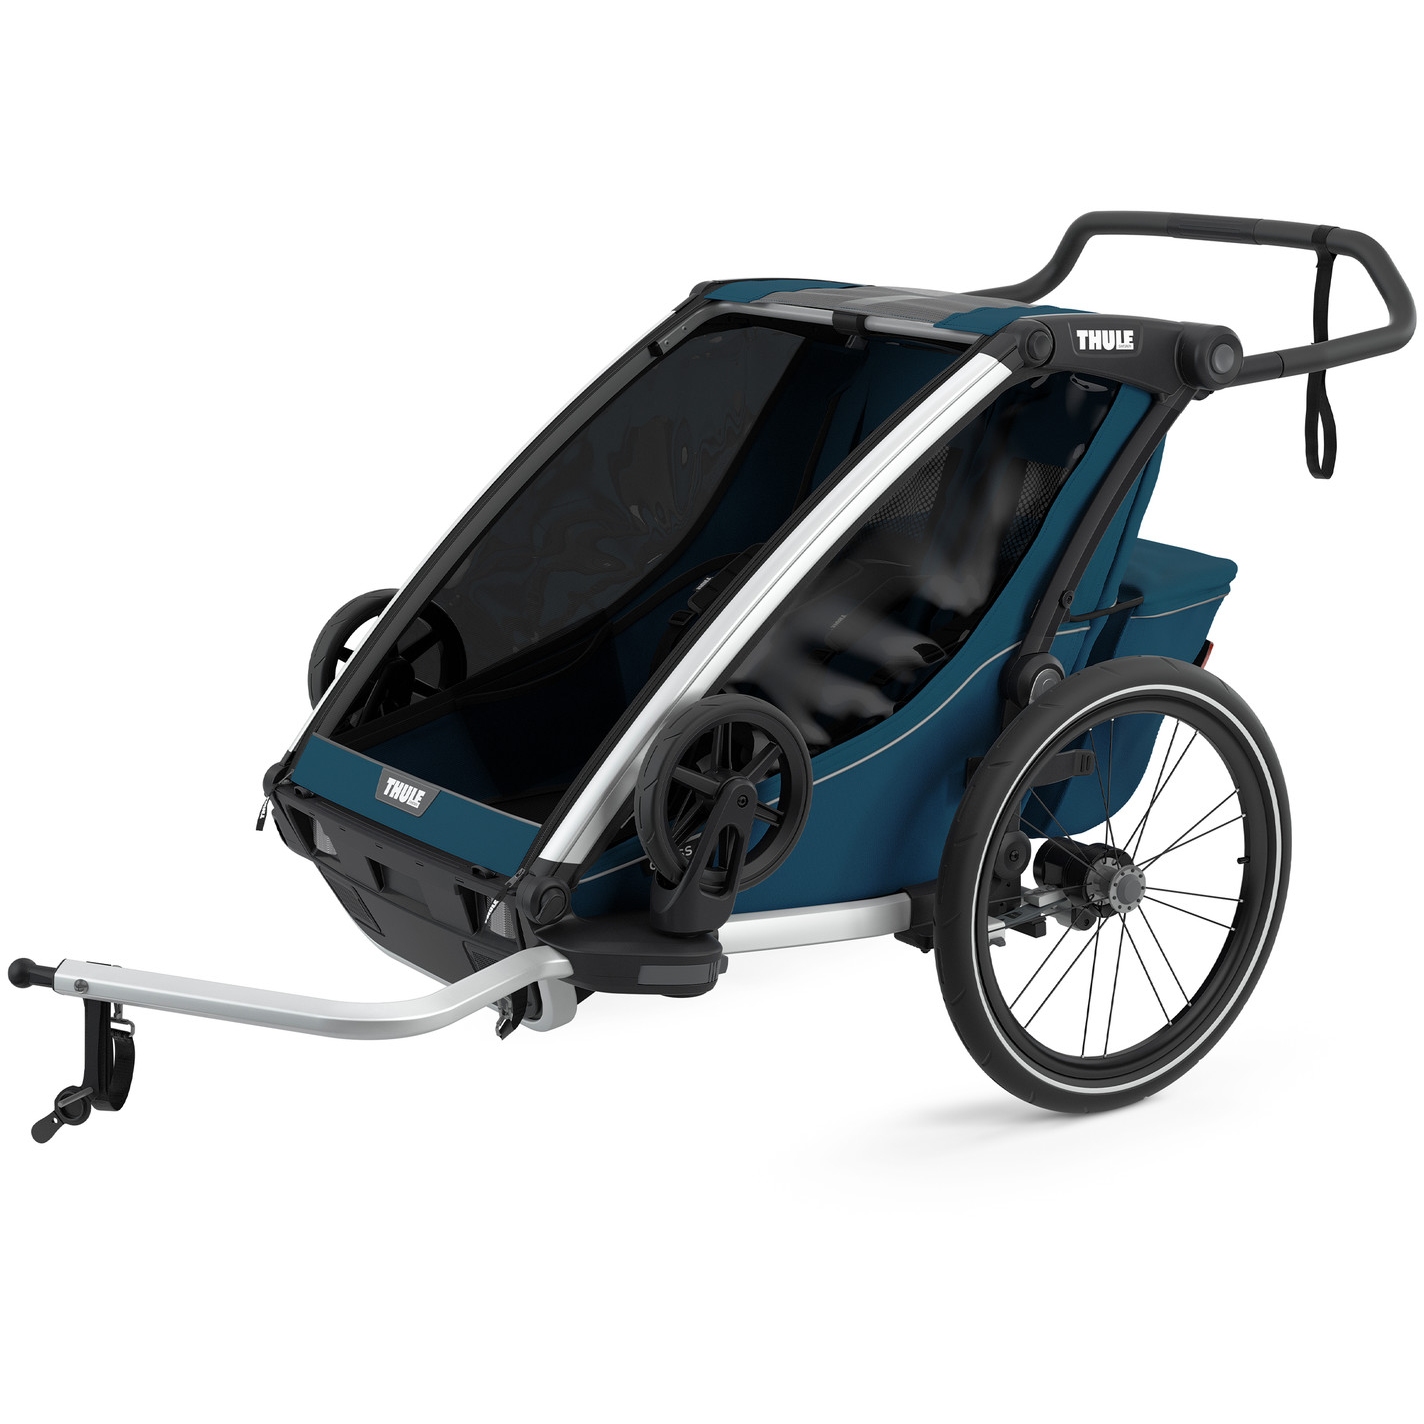 Produktbild von Thule Chariot Cross 2 - Fahrradanhänger für 2 Kinder - majolica blue